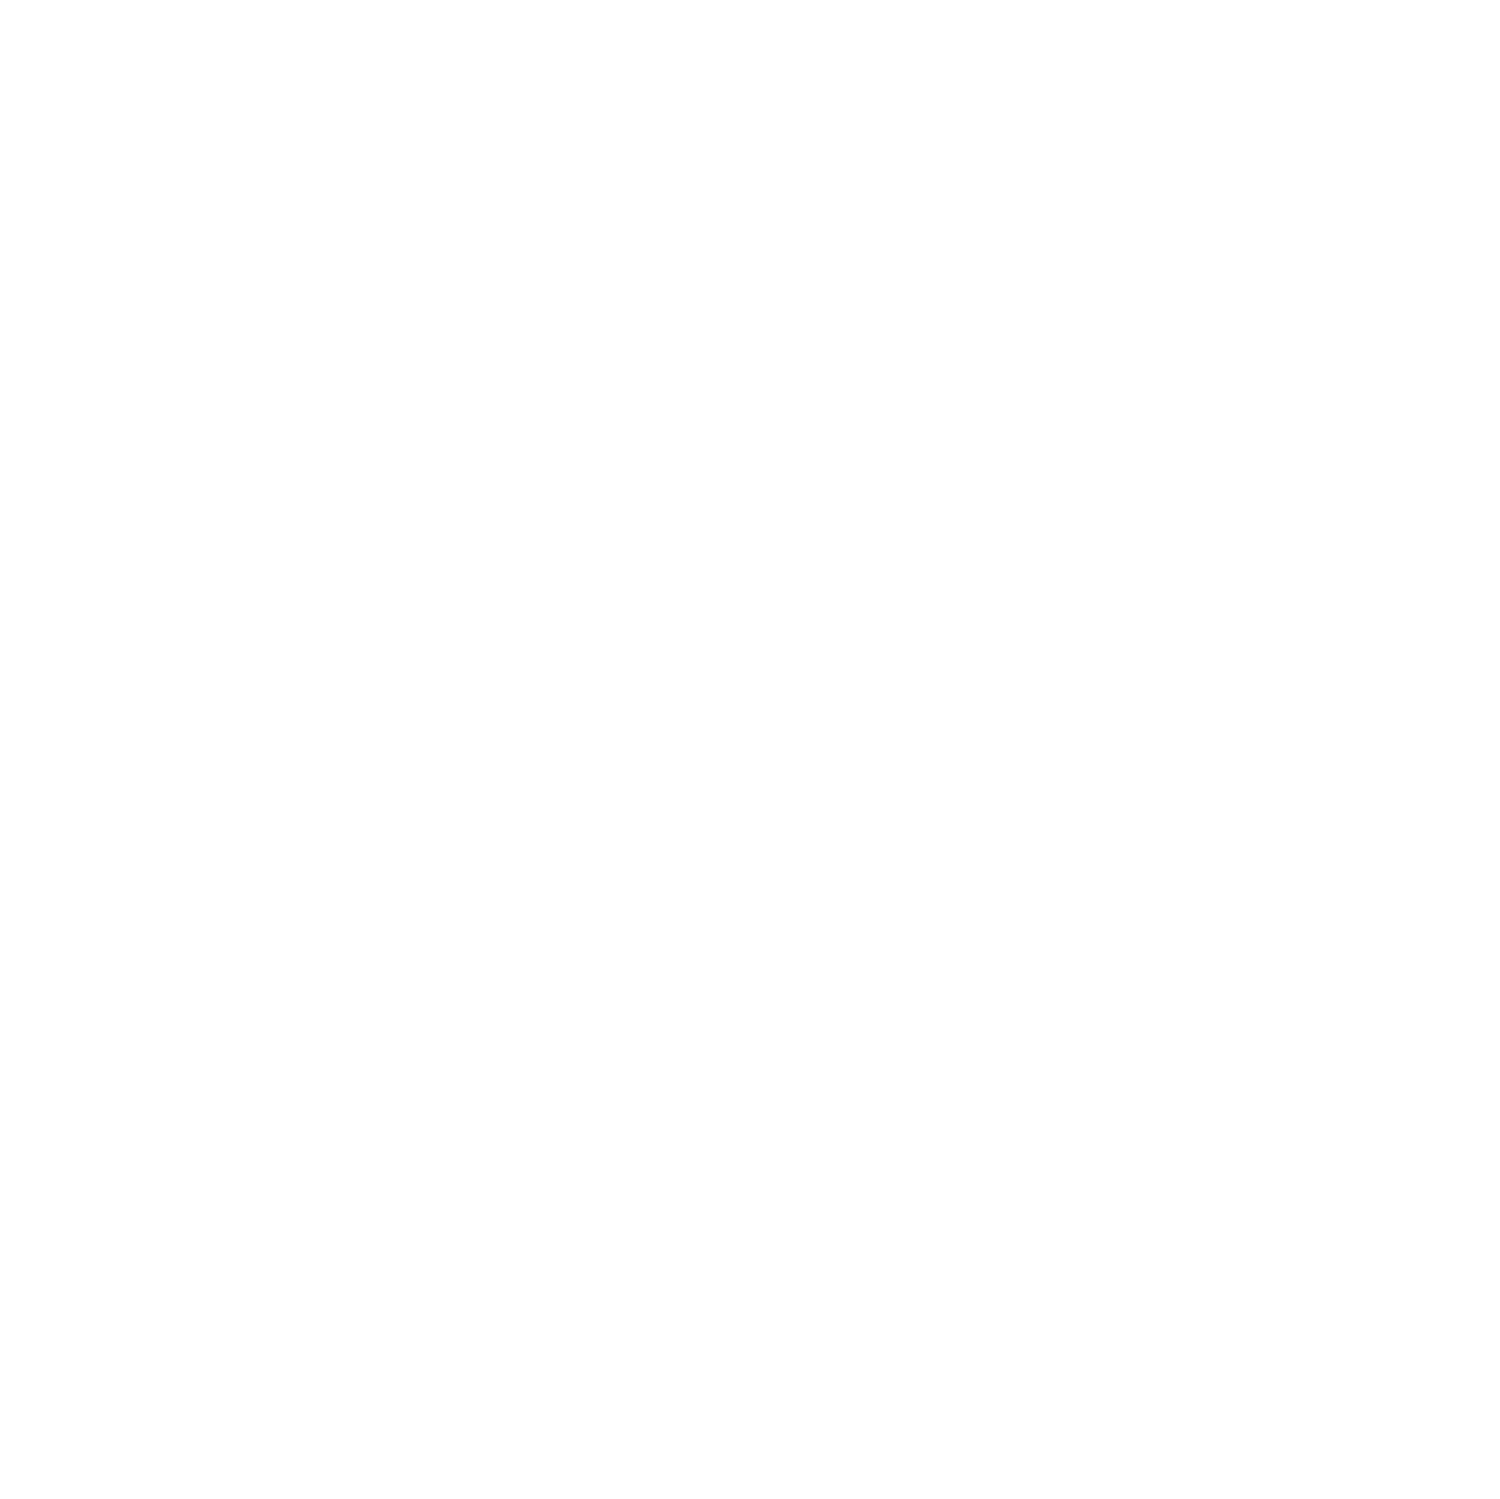 Carmen Torres for Florida Senate District 25 